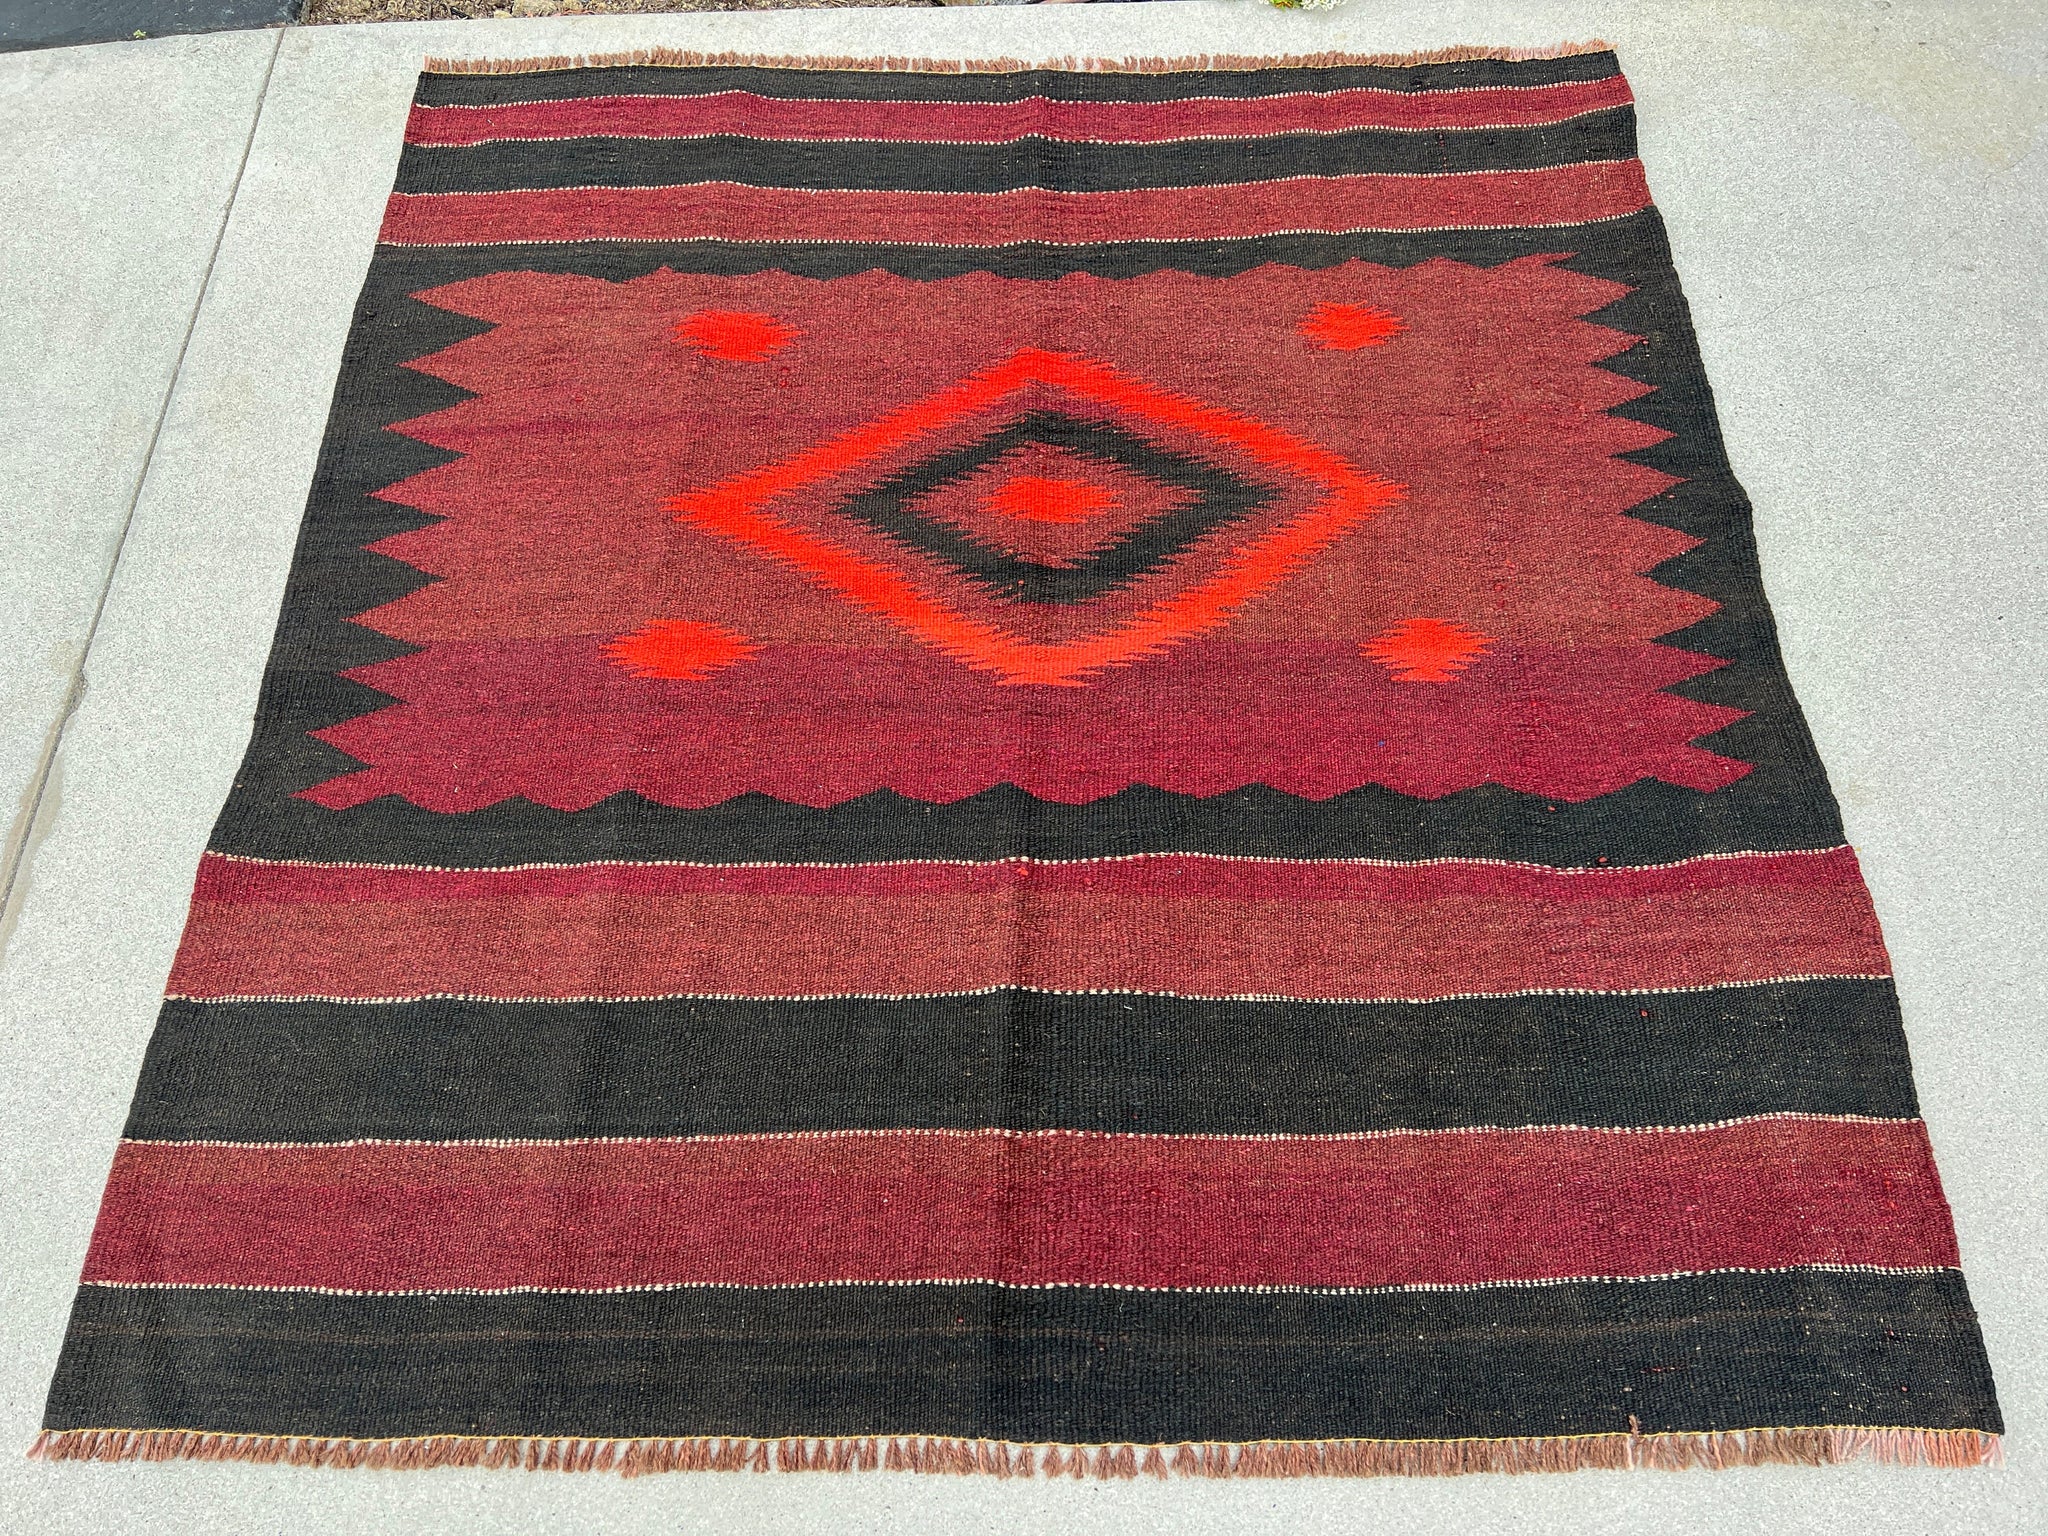 4x5 (150x120) Handmade Afghan Kilim Rug | Crimson Blood Red Black Ivory | Persian Bohemian Oushak Flatweave Hand Knotted Oriental Wool